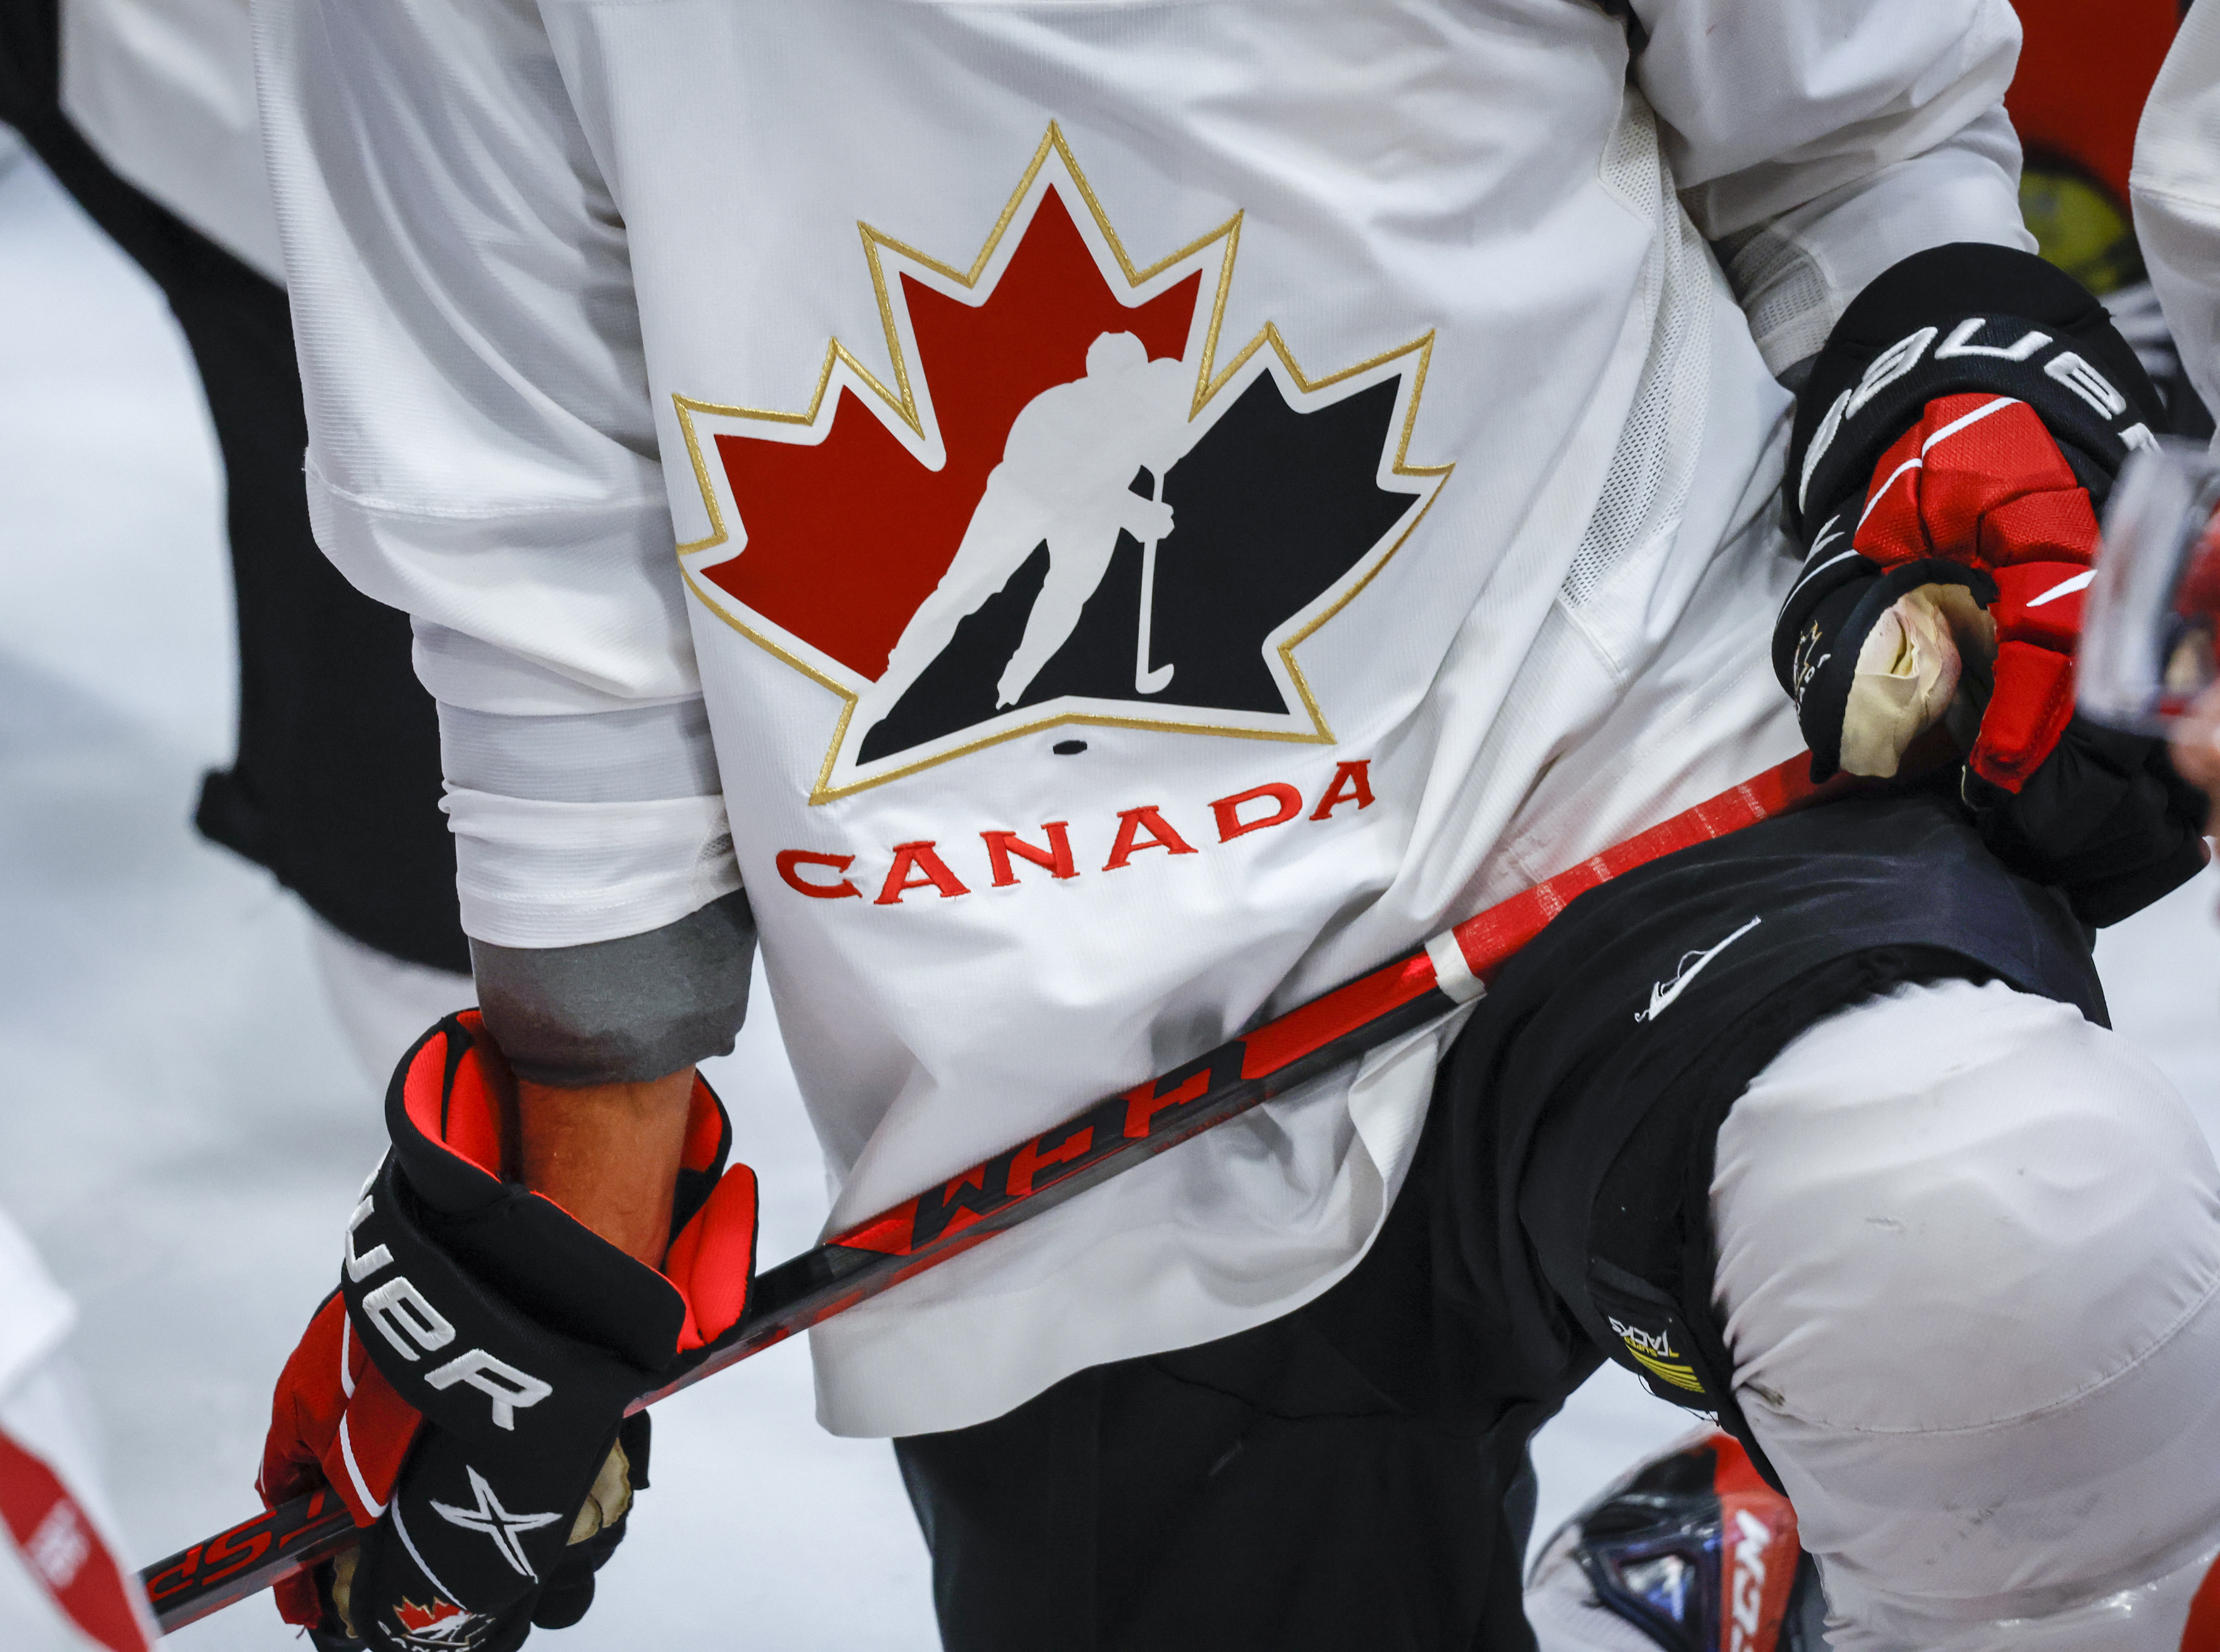 Результат хоккея канада. Хоккей Канада Канада. Кросби хоккеист Канада. Сборная Канады по хоккею с шайбой. Канада хоккей картинки.